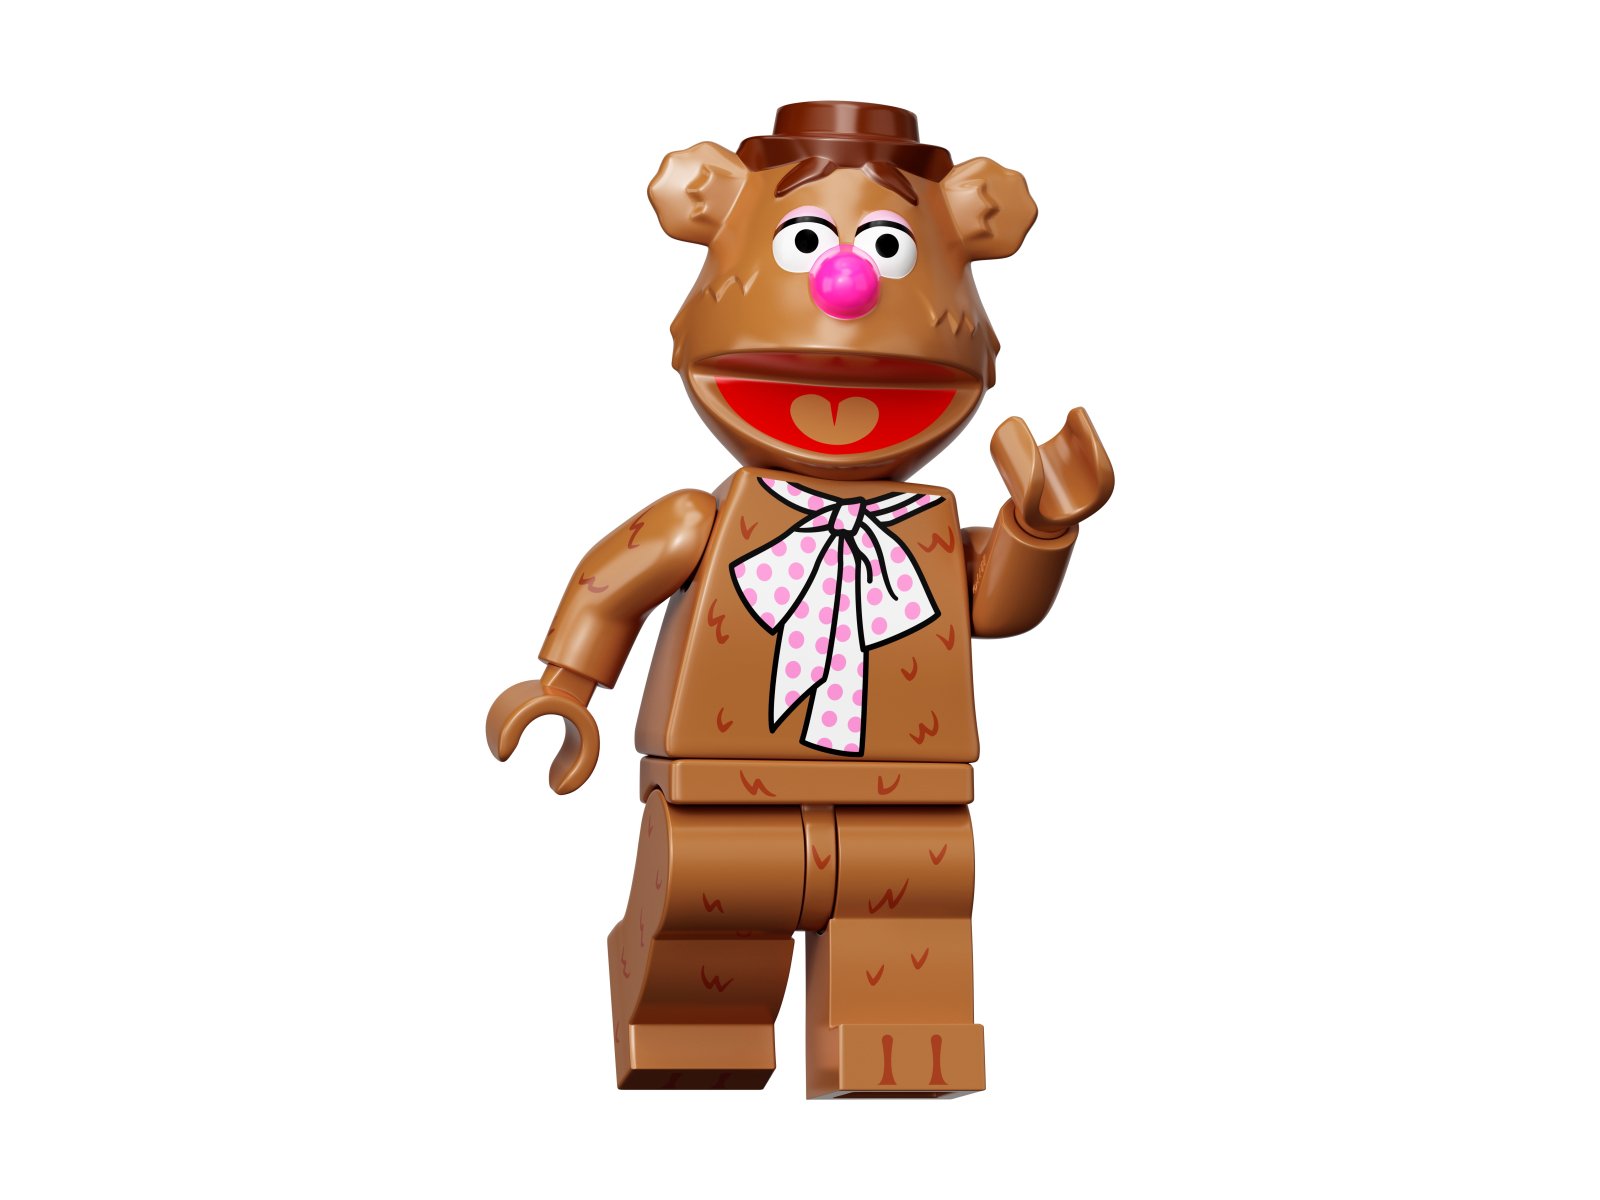 LEGO Minifigures Muppety 71033